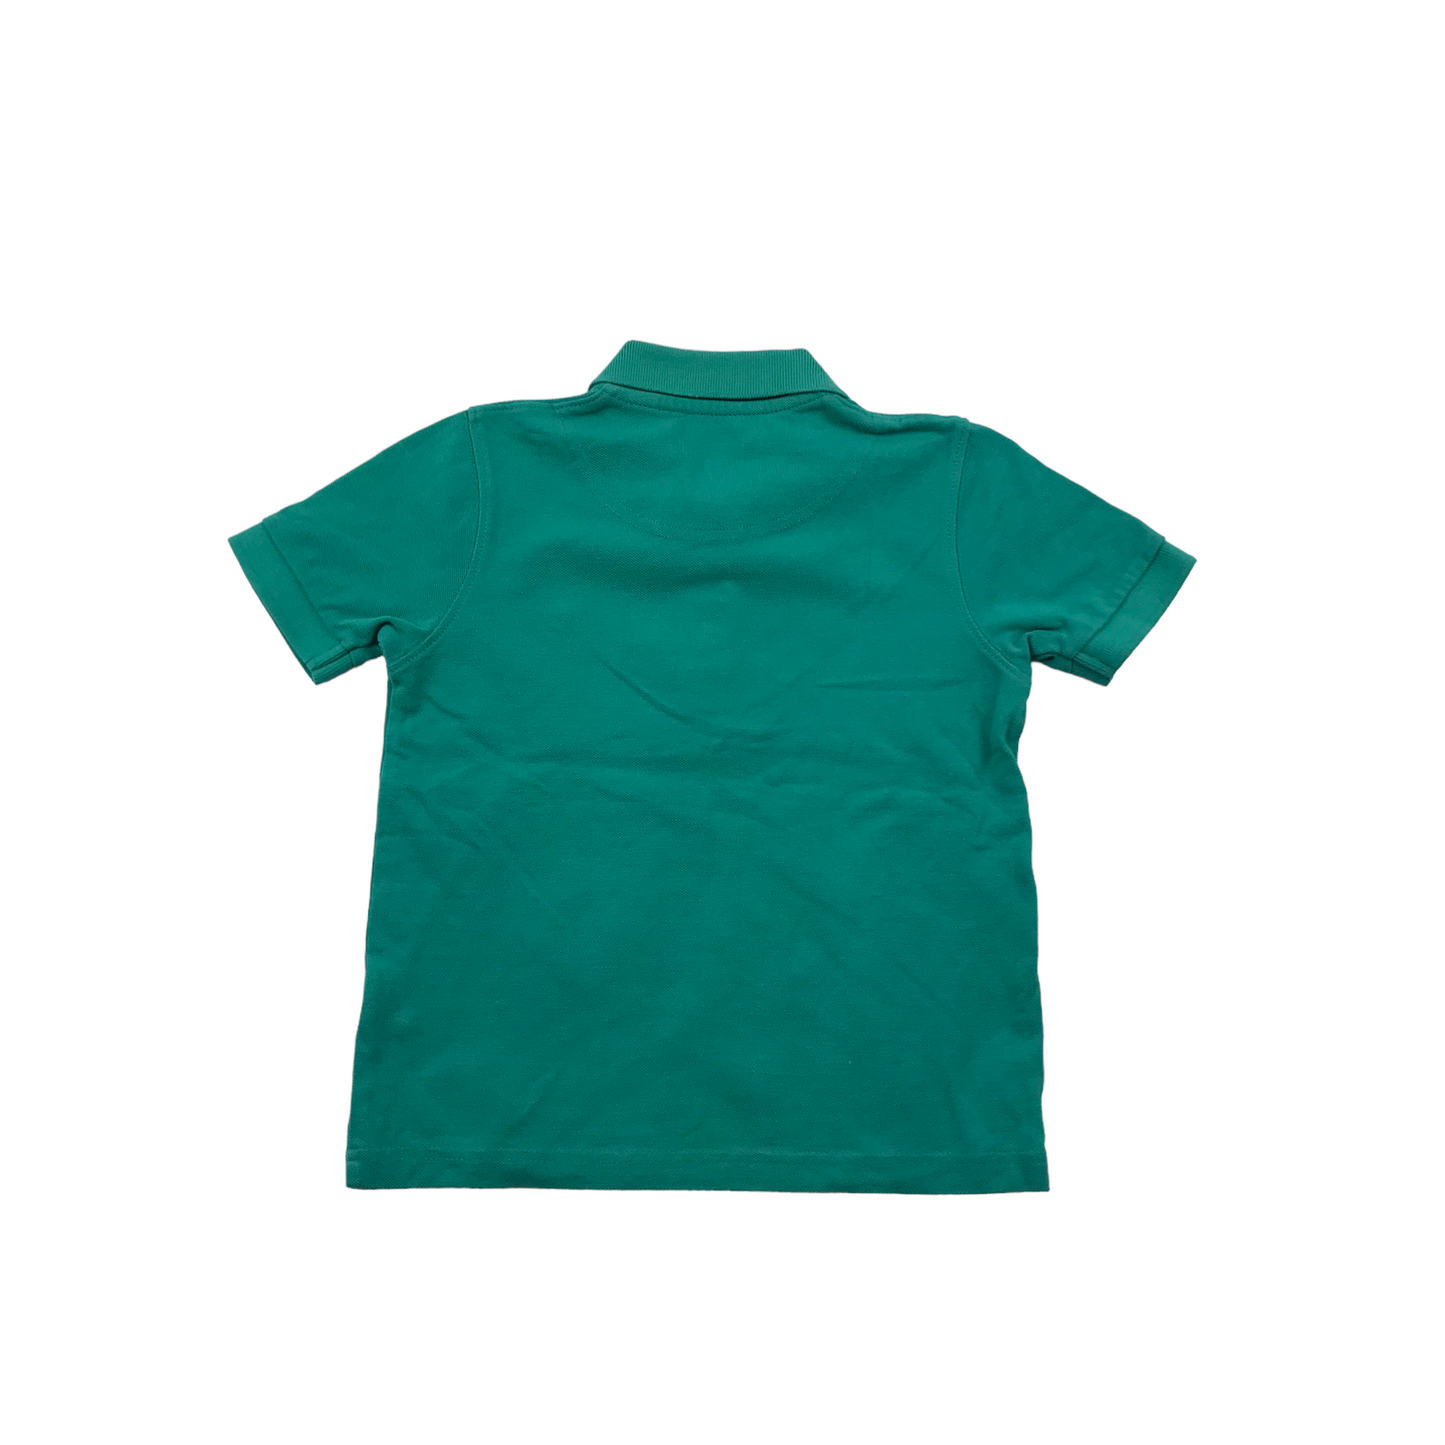 Timberland Light Blue and Turquoise Logo T-shirt Bundle Age 6